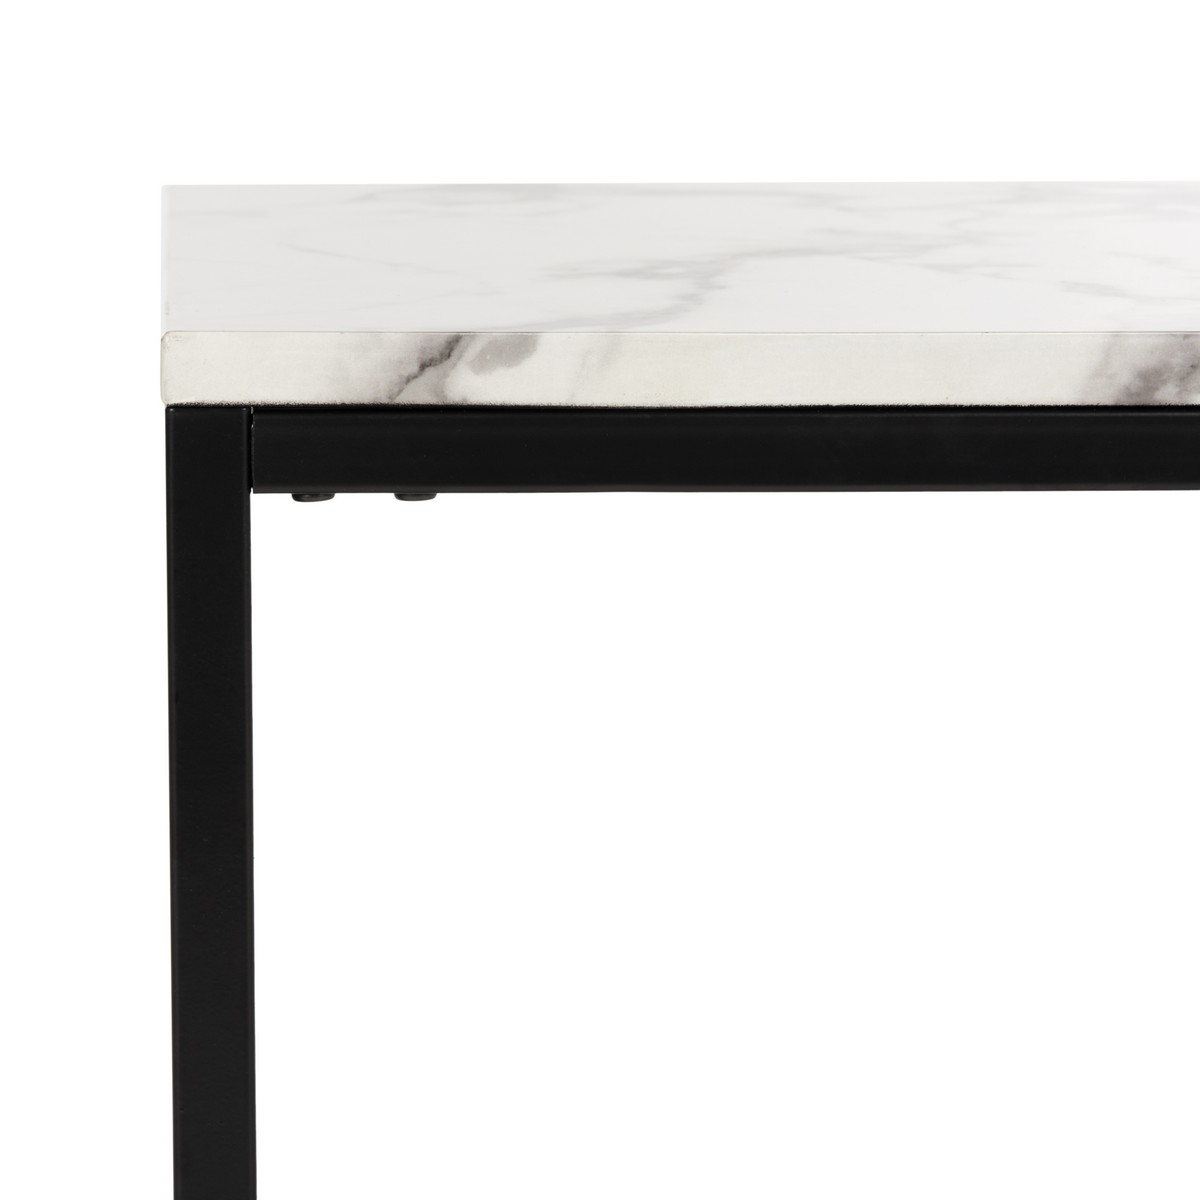 Baize End Table - White/Grey - Arlo Home - Image 3